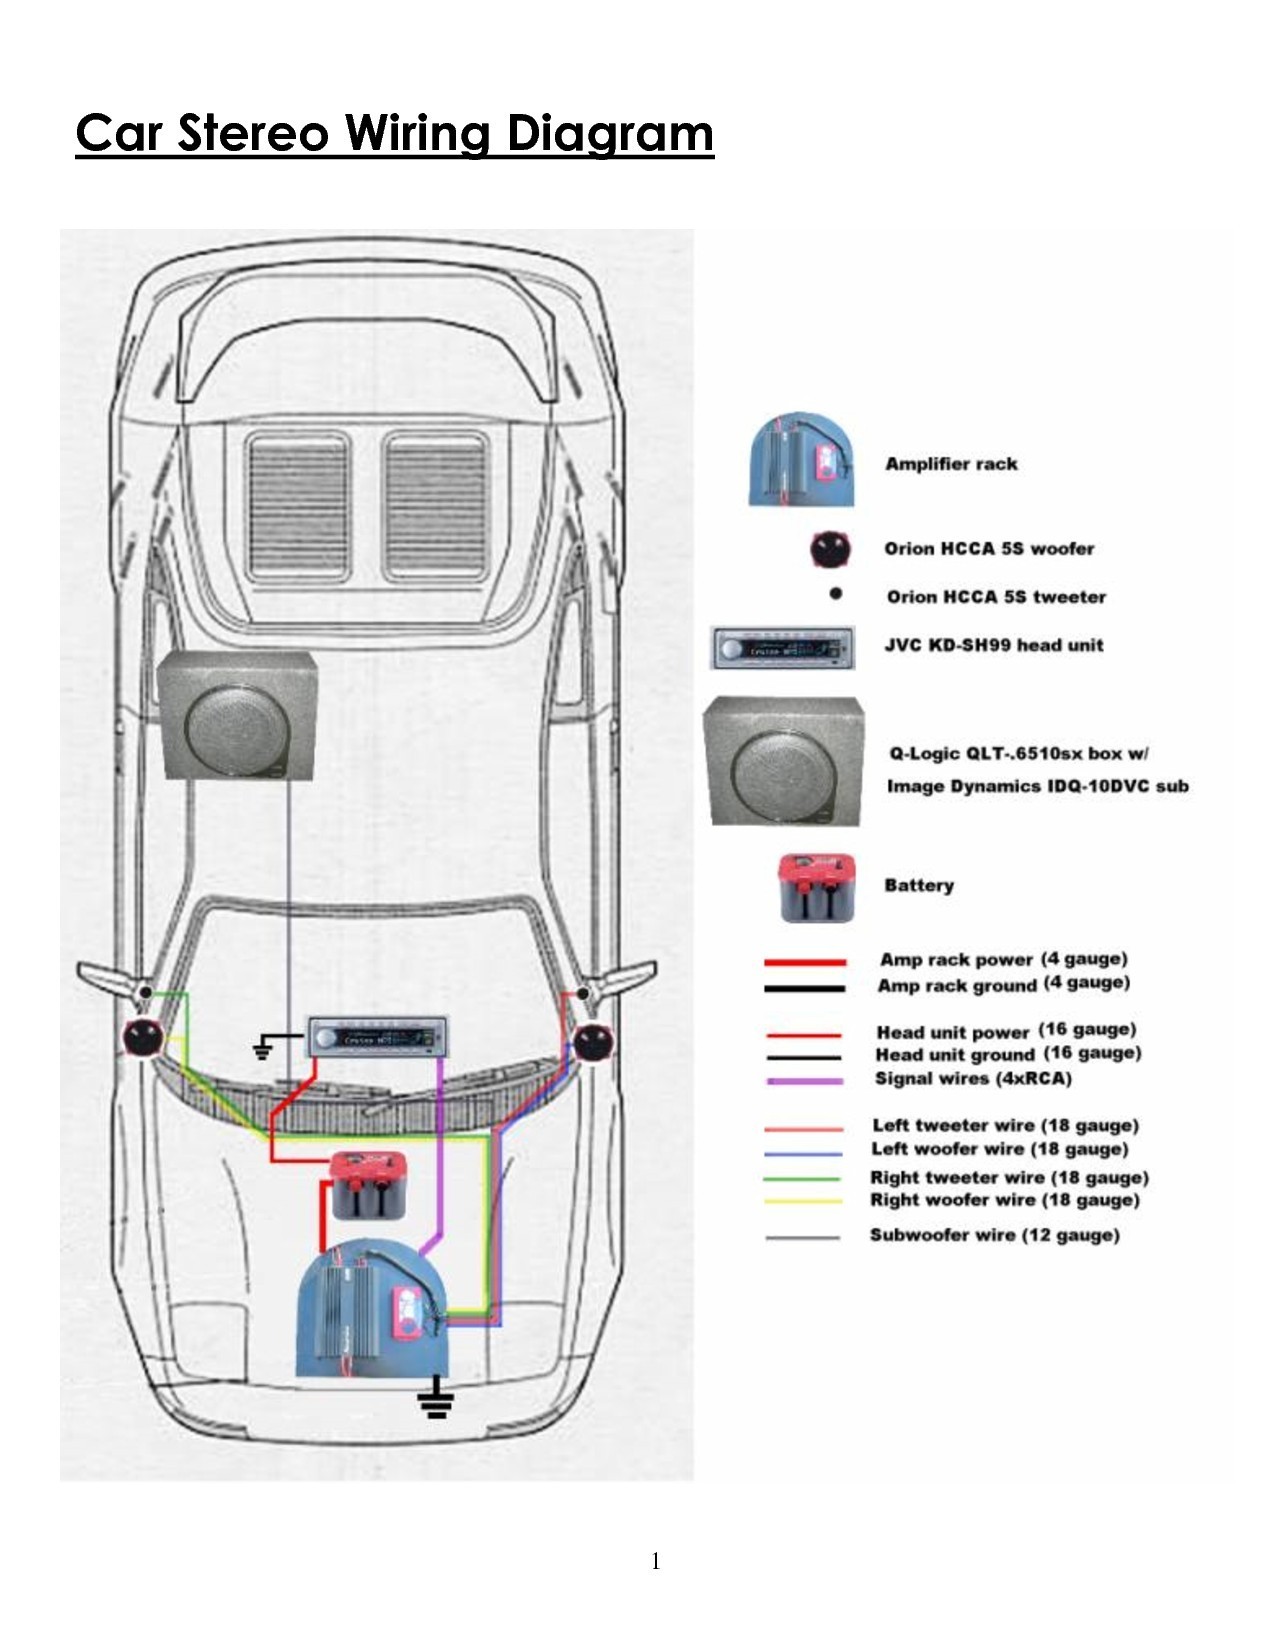 Car Subwoofer Wiring Diagram Car Sub and Amp Wiring Diagram Wiring Diagram for Car Amplifier and Of Car Subwoofer Wiring Diagram